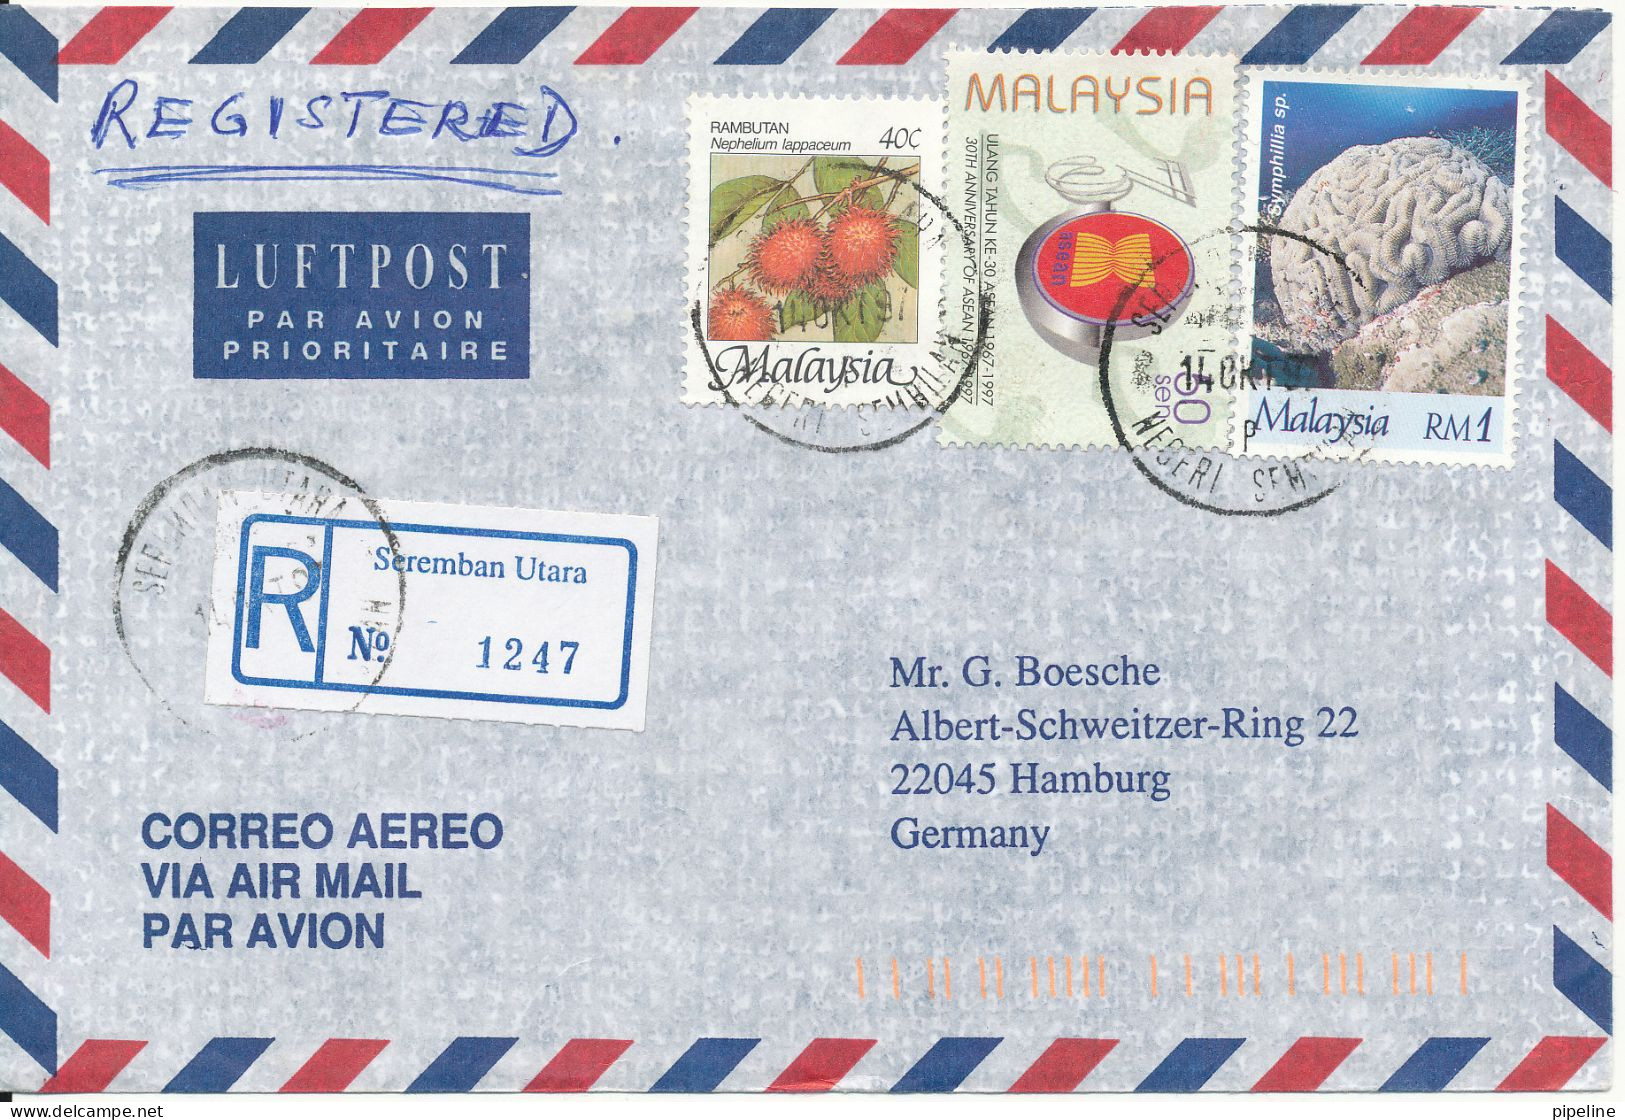 Malaysia Registered Air Mail Cover Sent To Germany Seremban Utara 14-10-1997 - Malaysia (1964-...)